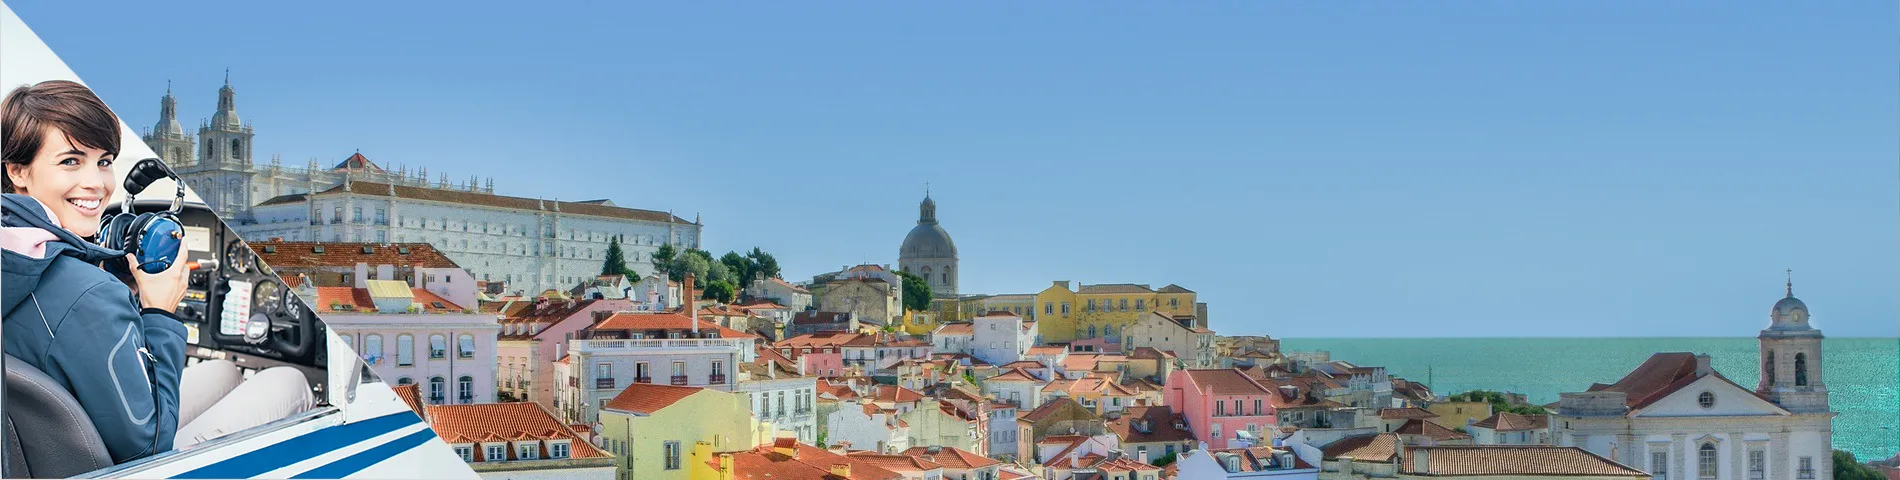 Lisbon - Portuguese for Aviation